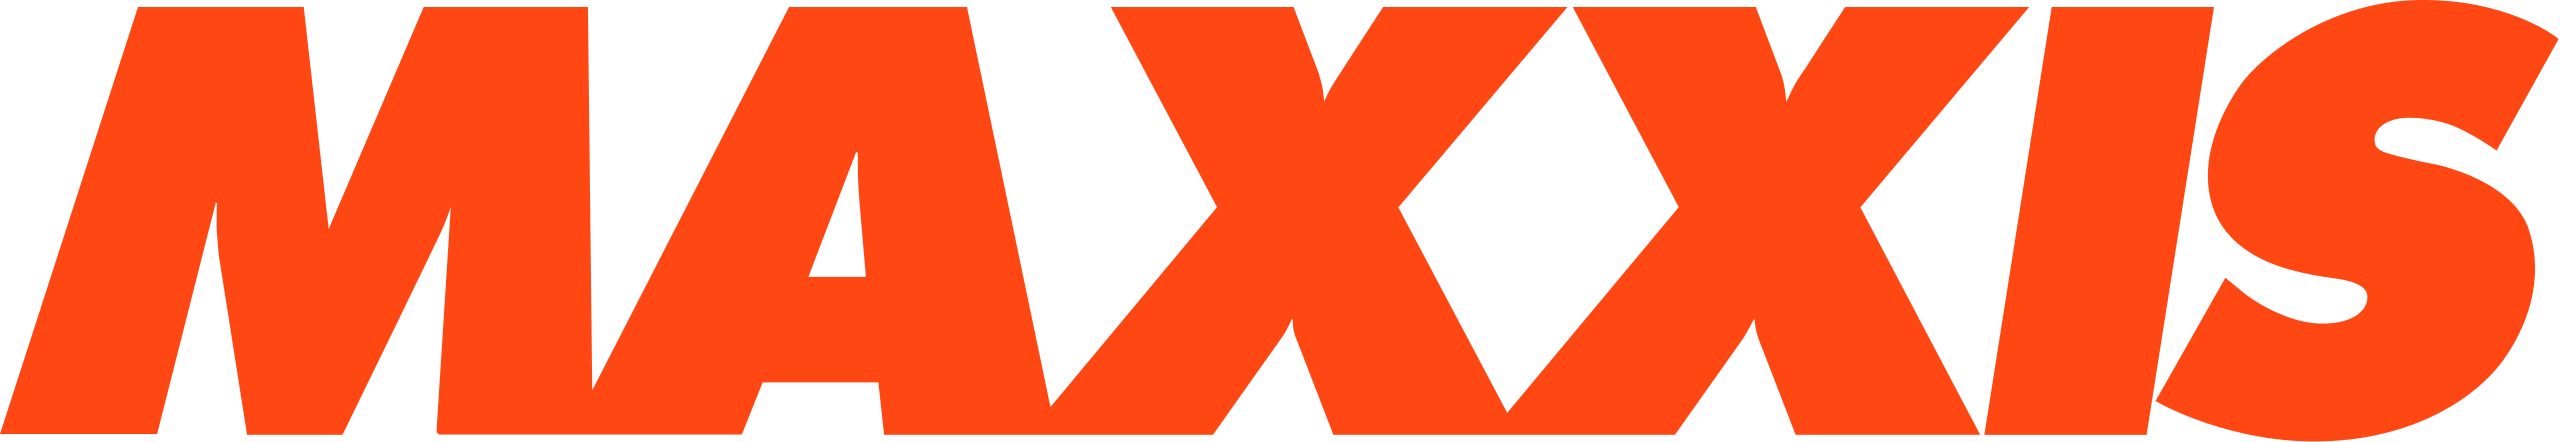 MAXXIS_logo.svg